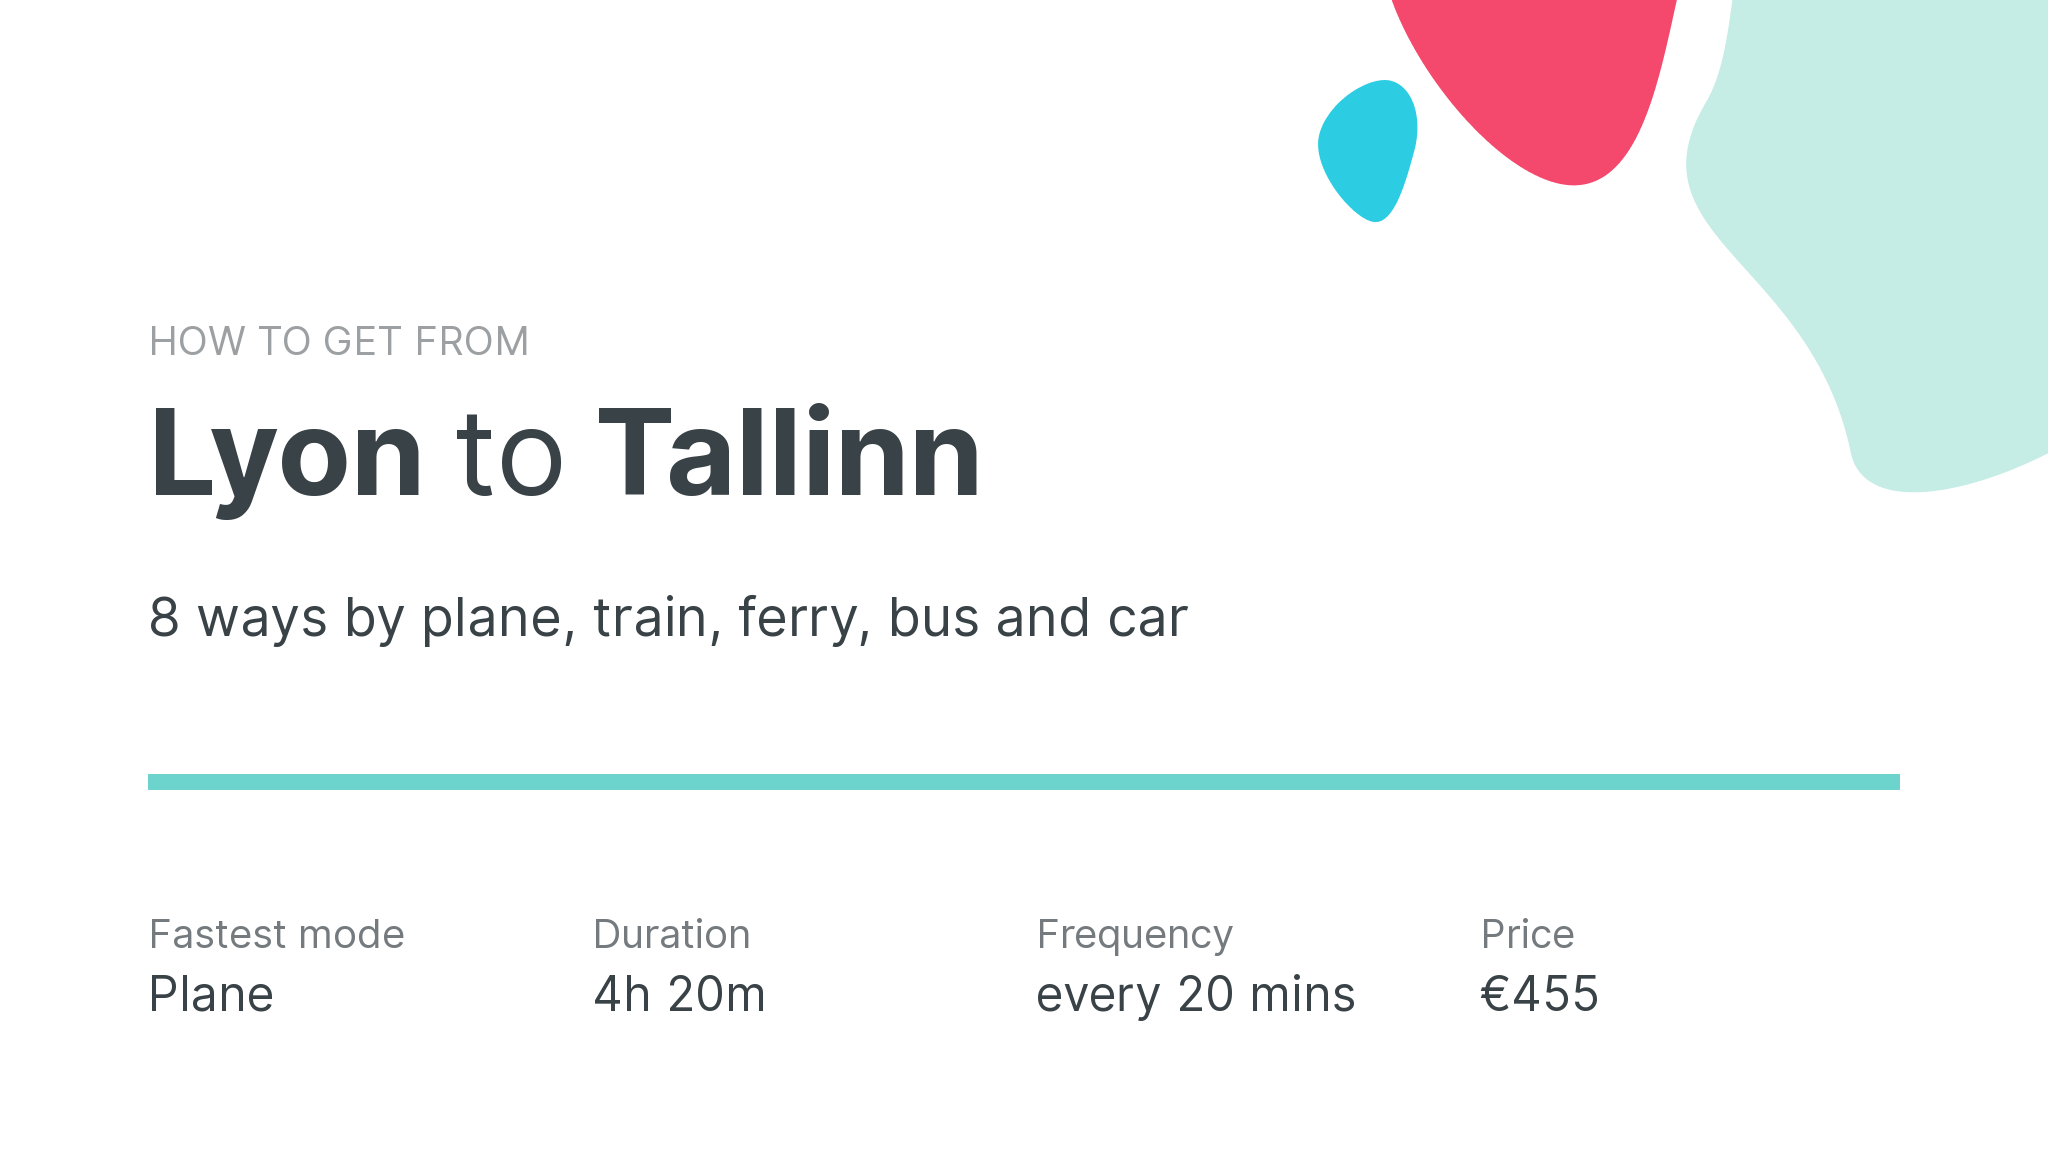 How do I get from Lyon to Tallinn